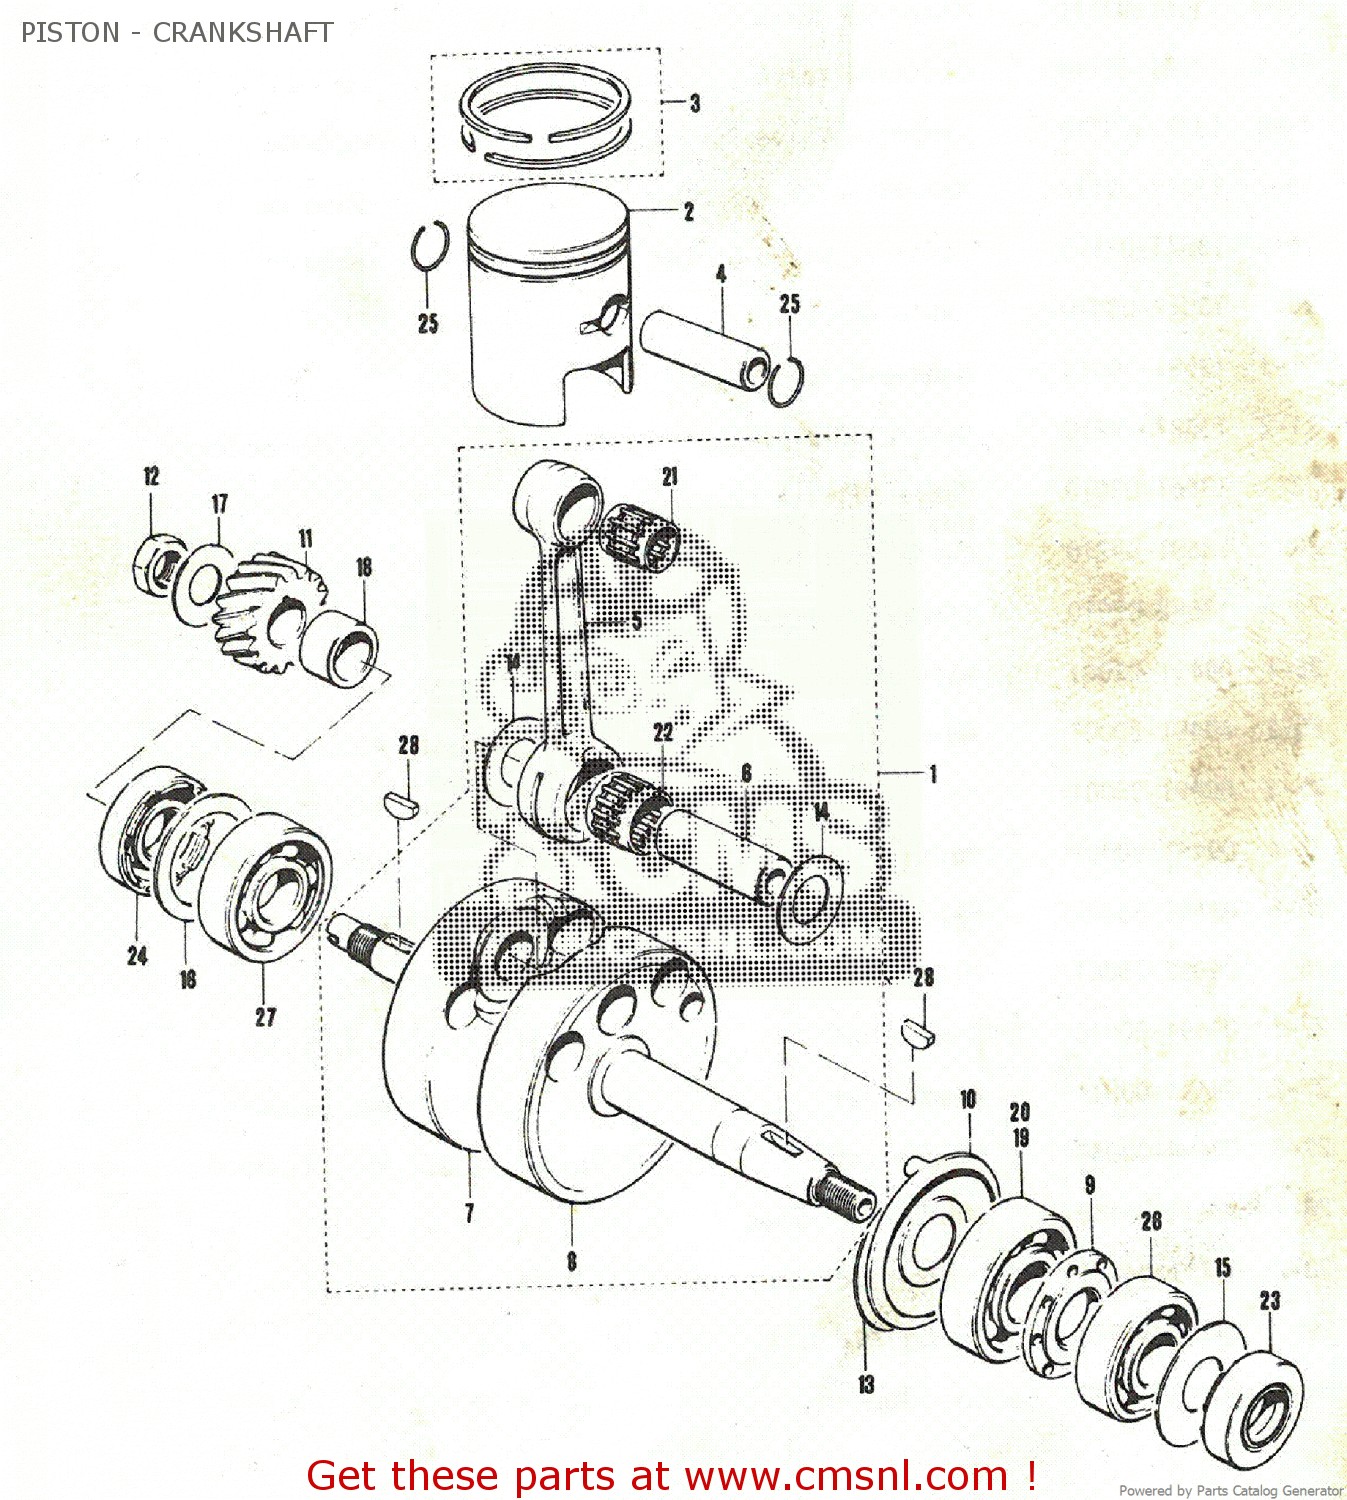 Car Engine Diagram Piston Suzuki B100p Piston Crankshaft original Piston Crankshaft Of Car Engine Diagram Piston